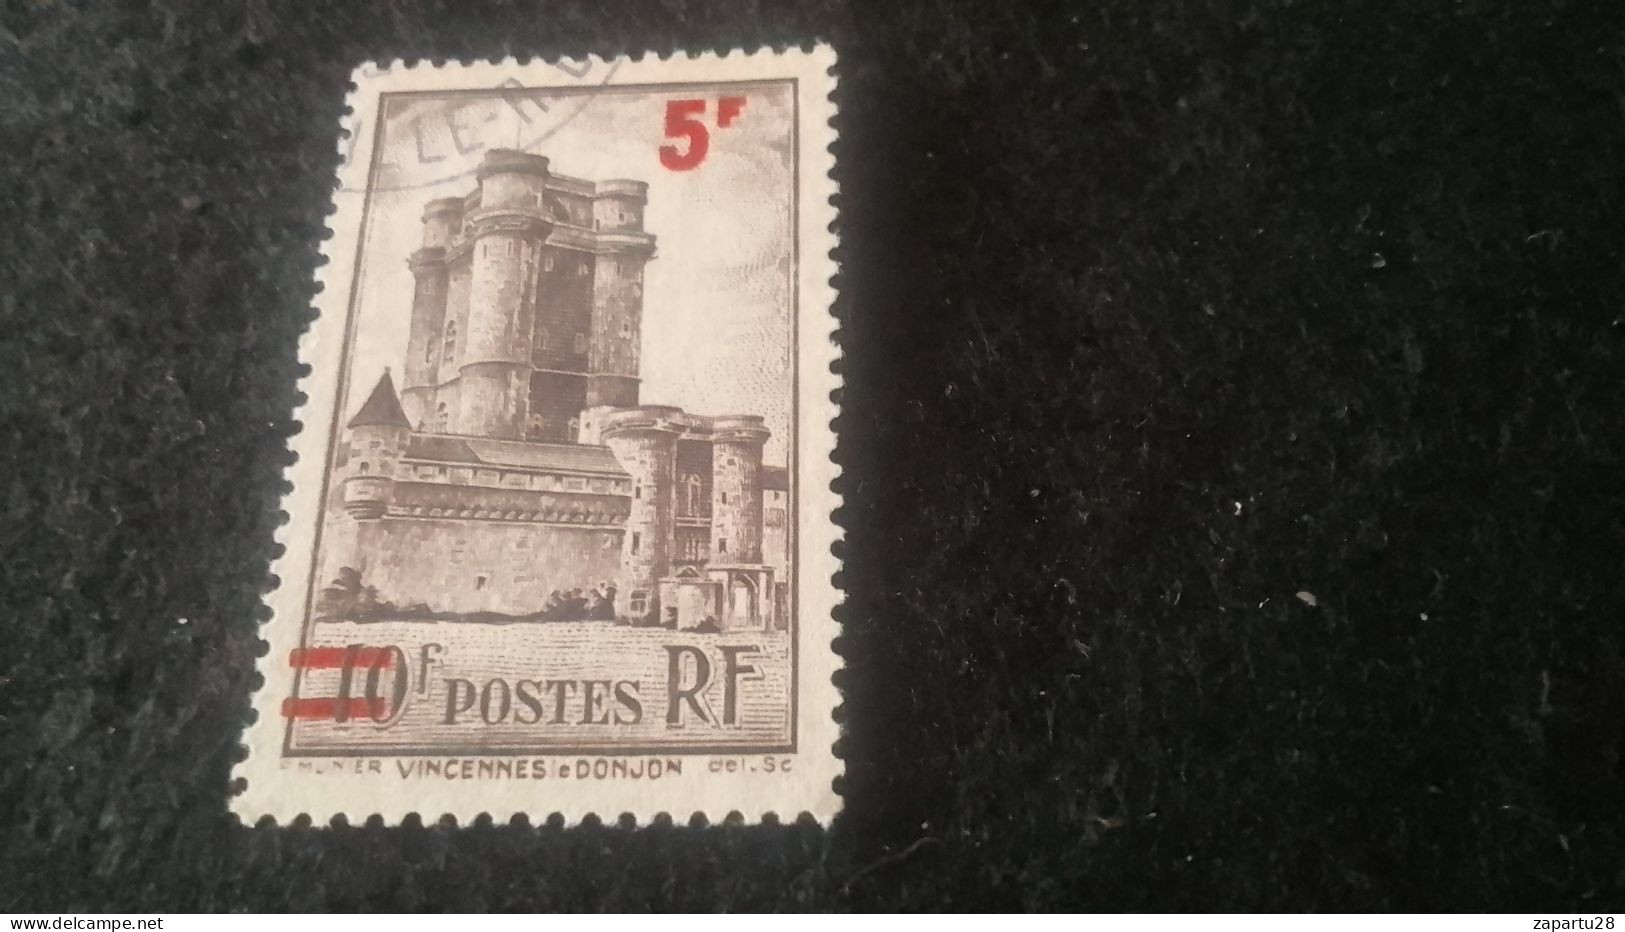 FRANSA- 1930-50       10    FR  DAMGALI   SÜRSARJLI - Used Stamps